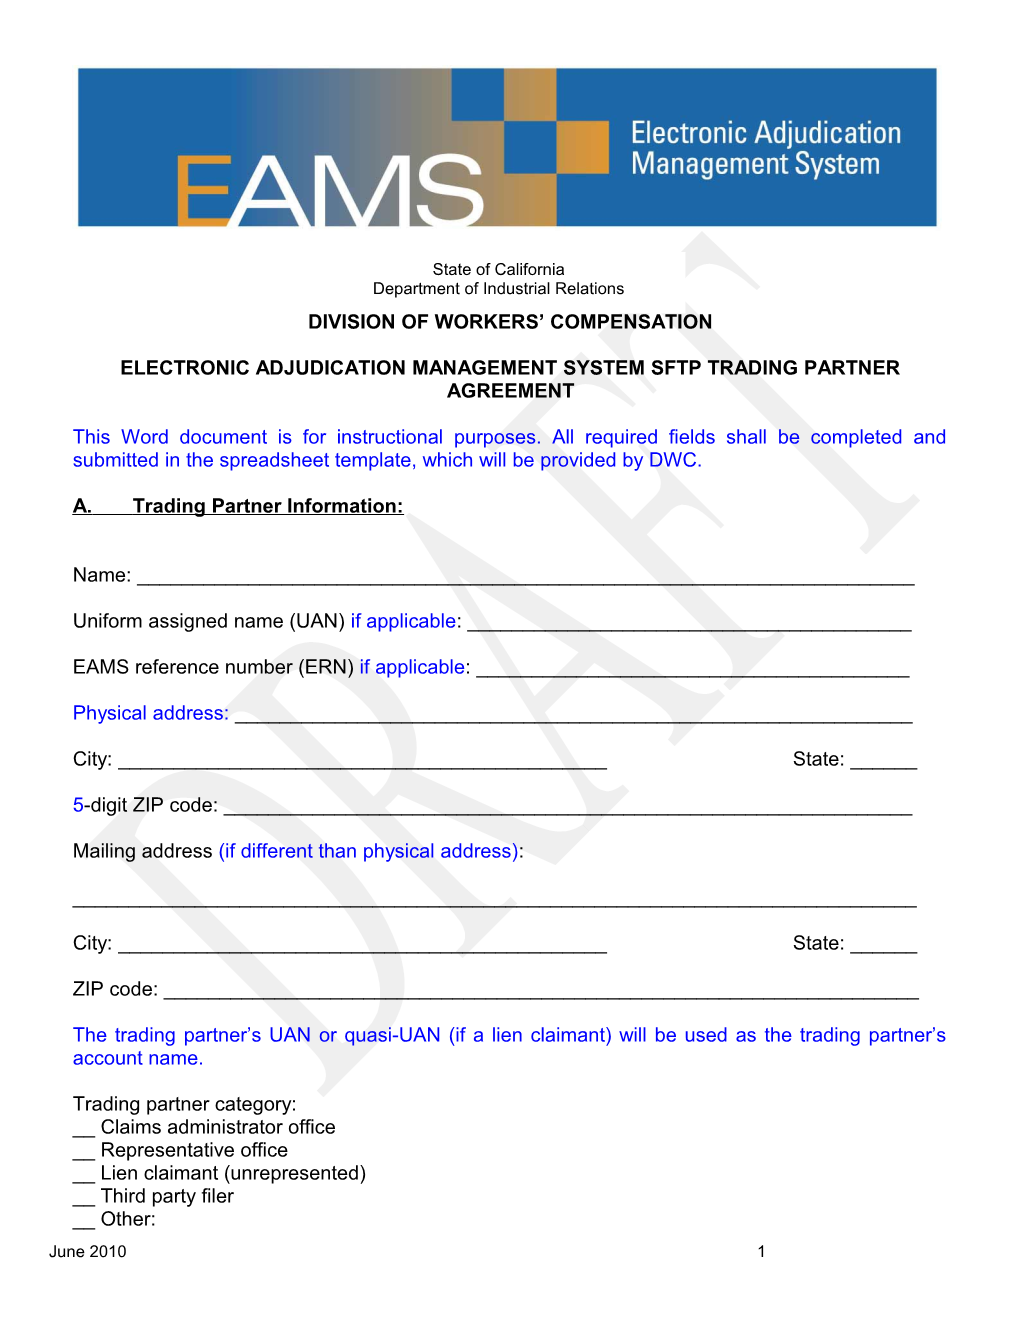 Electronic Adjudication Management System Sftp Trading Partner Agreement